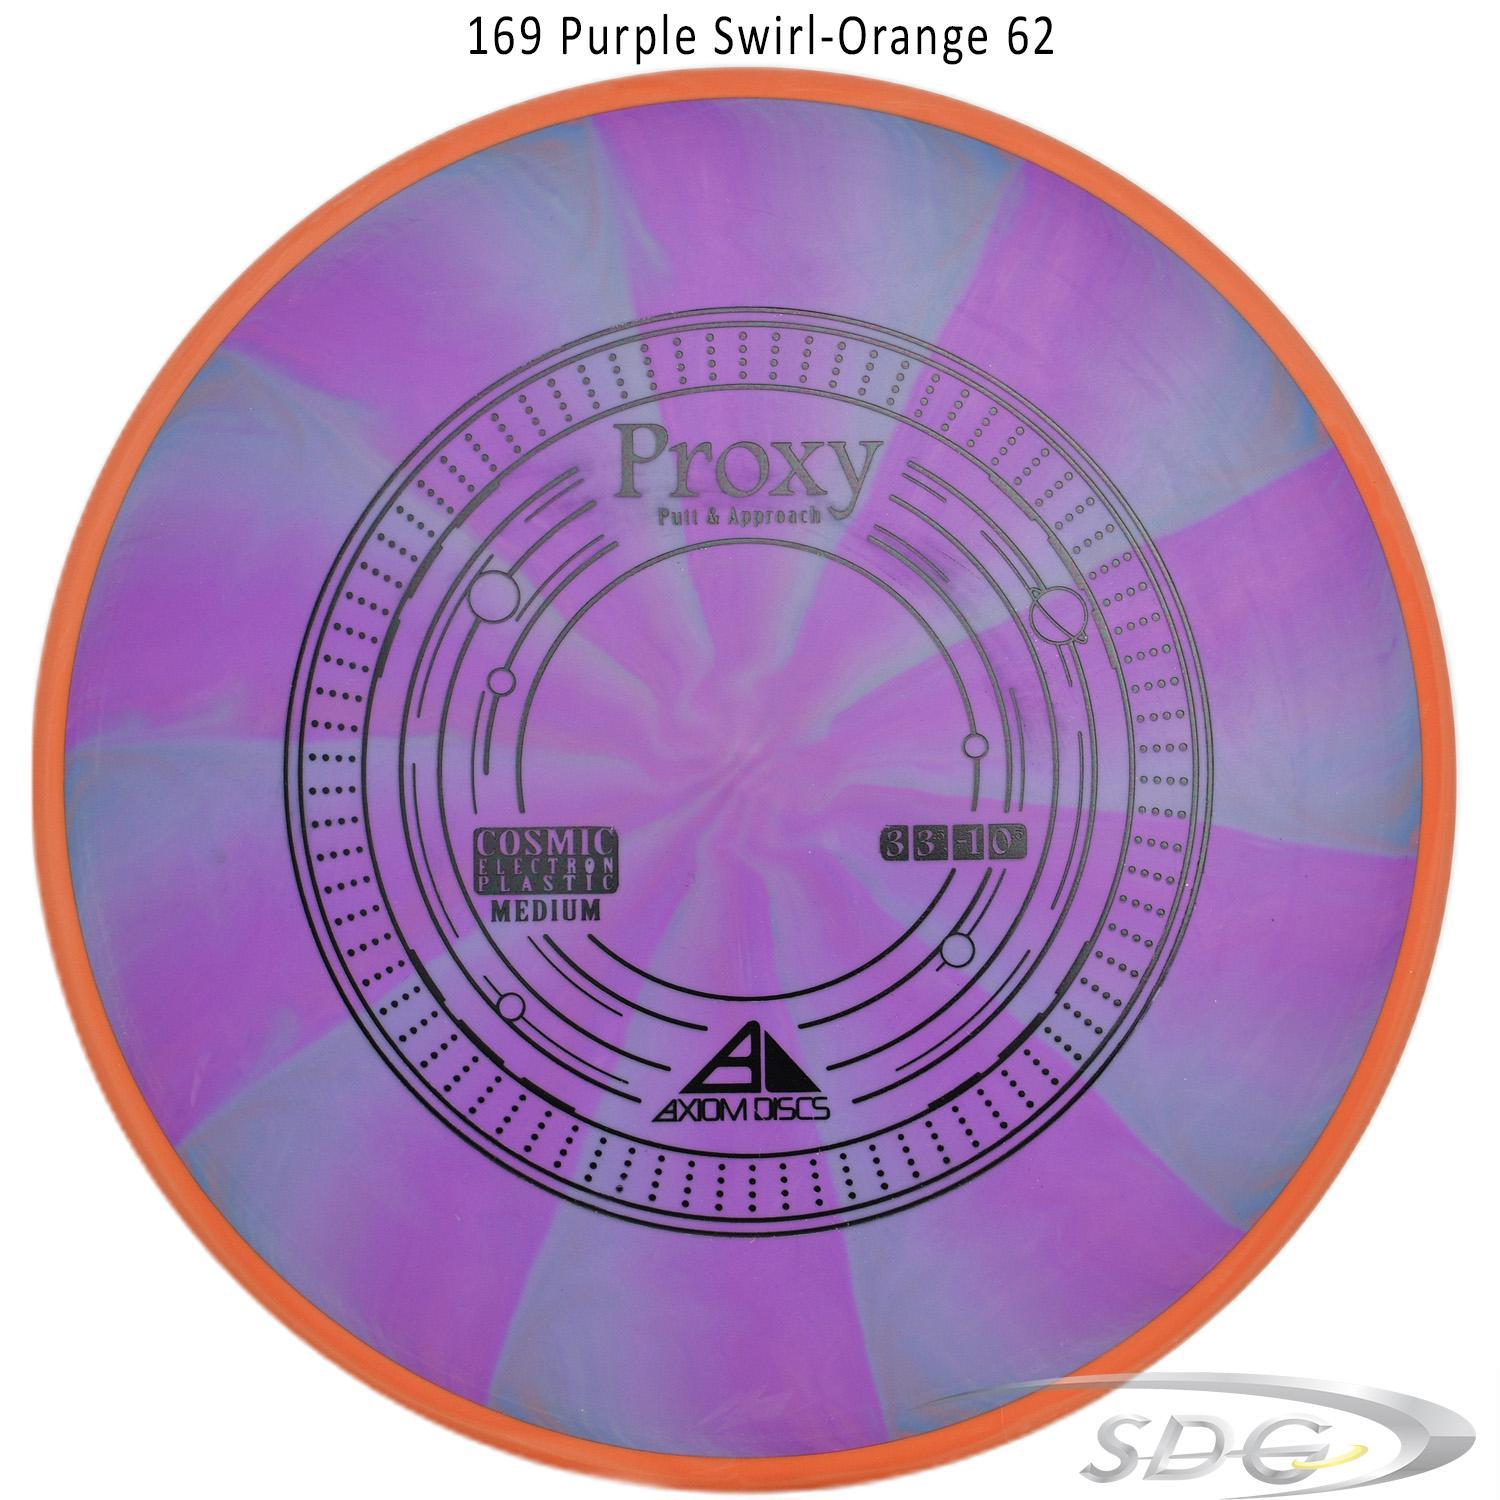 axiom-cosmic-electron-proxy-medium-disc-golf-putt-approach 169 Purple Swirl-Orange 62 